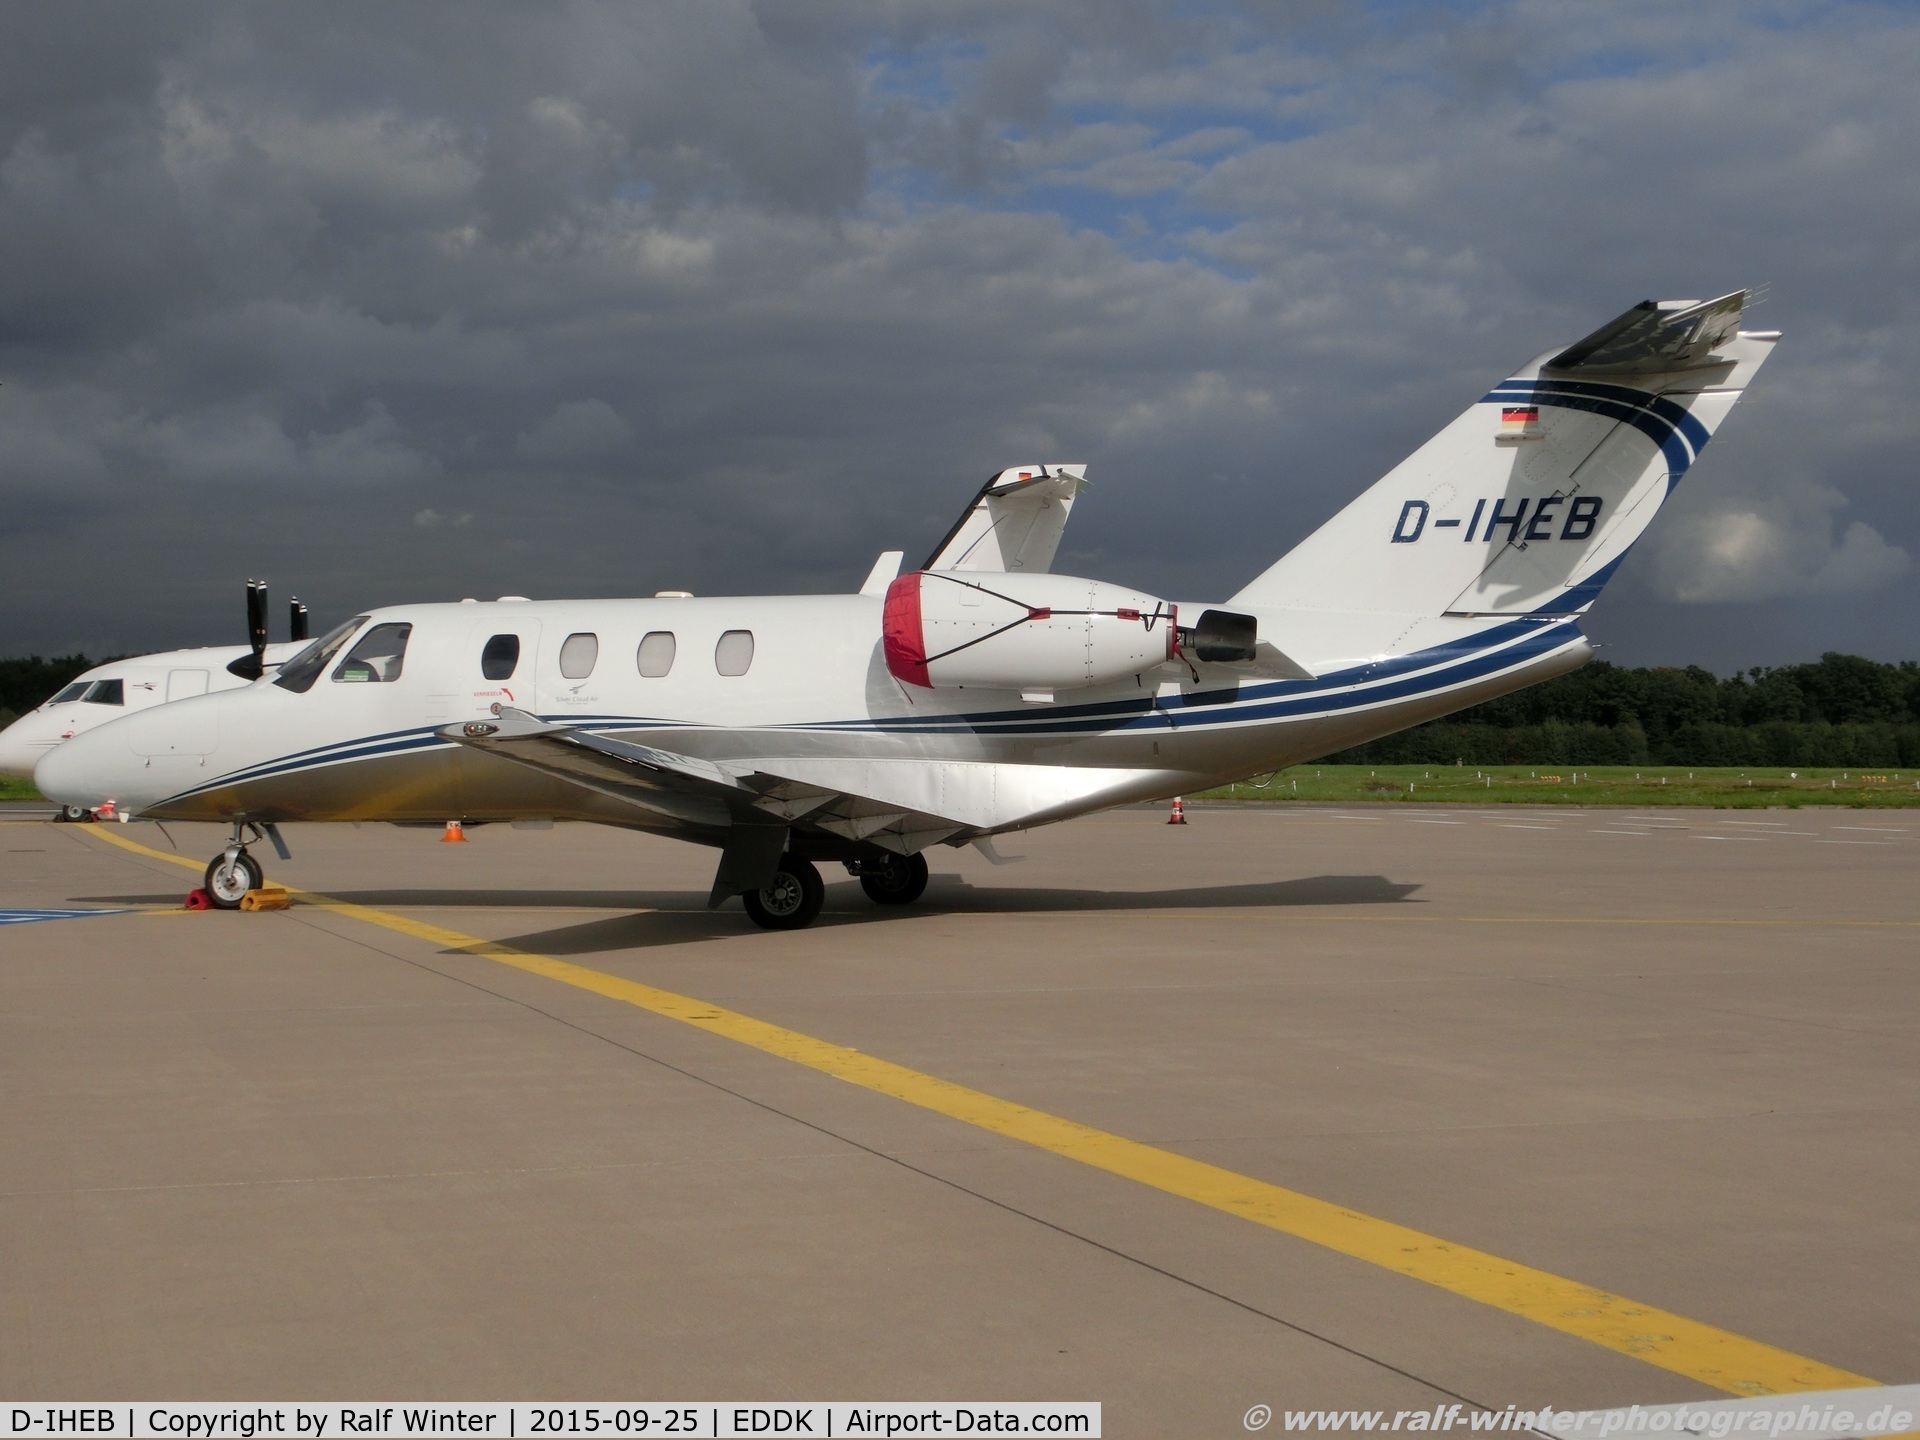 D-IHEB, 1994 Cessna 525 CitationJet CJ1 C/N 525-0064, Cessna 525 CitationJet 1 - SCR Silver Cloud Air - 525-0064 - D-IHEB - 25.09.2015 - CGN